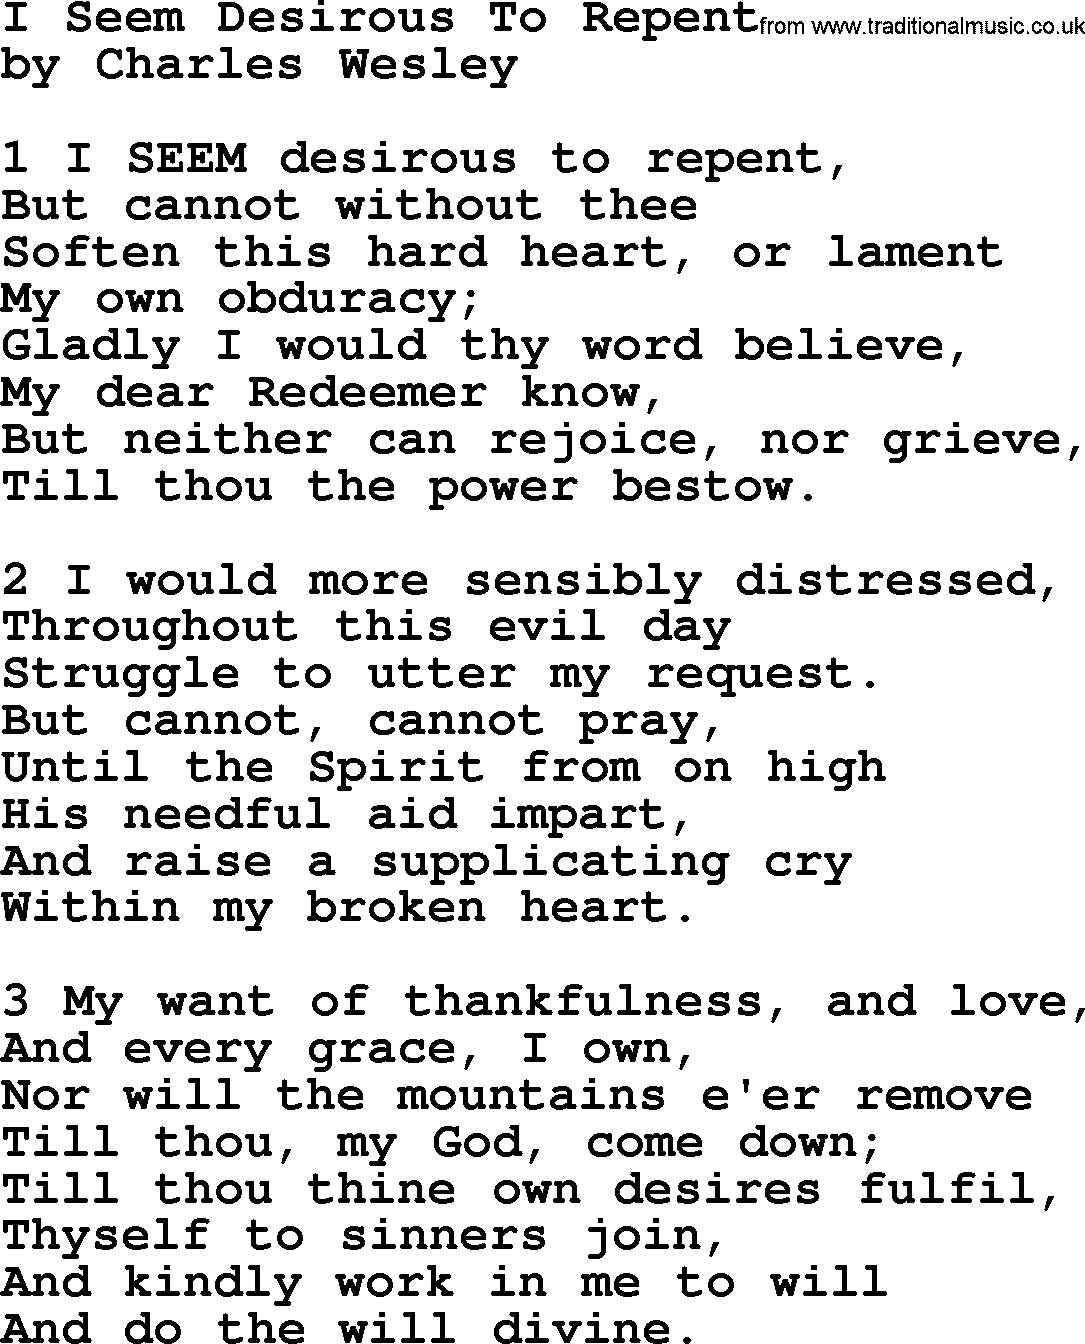 Charles Wesley hymn: I Seem Desirous To Repent, lyrics